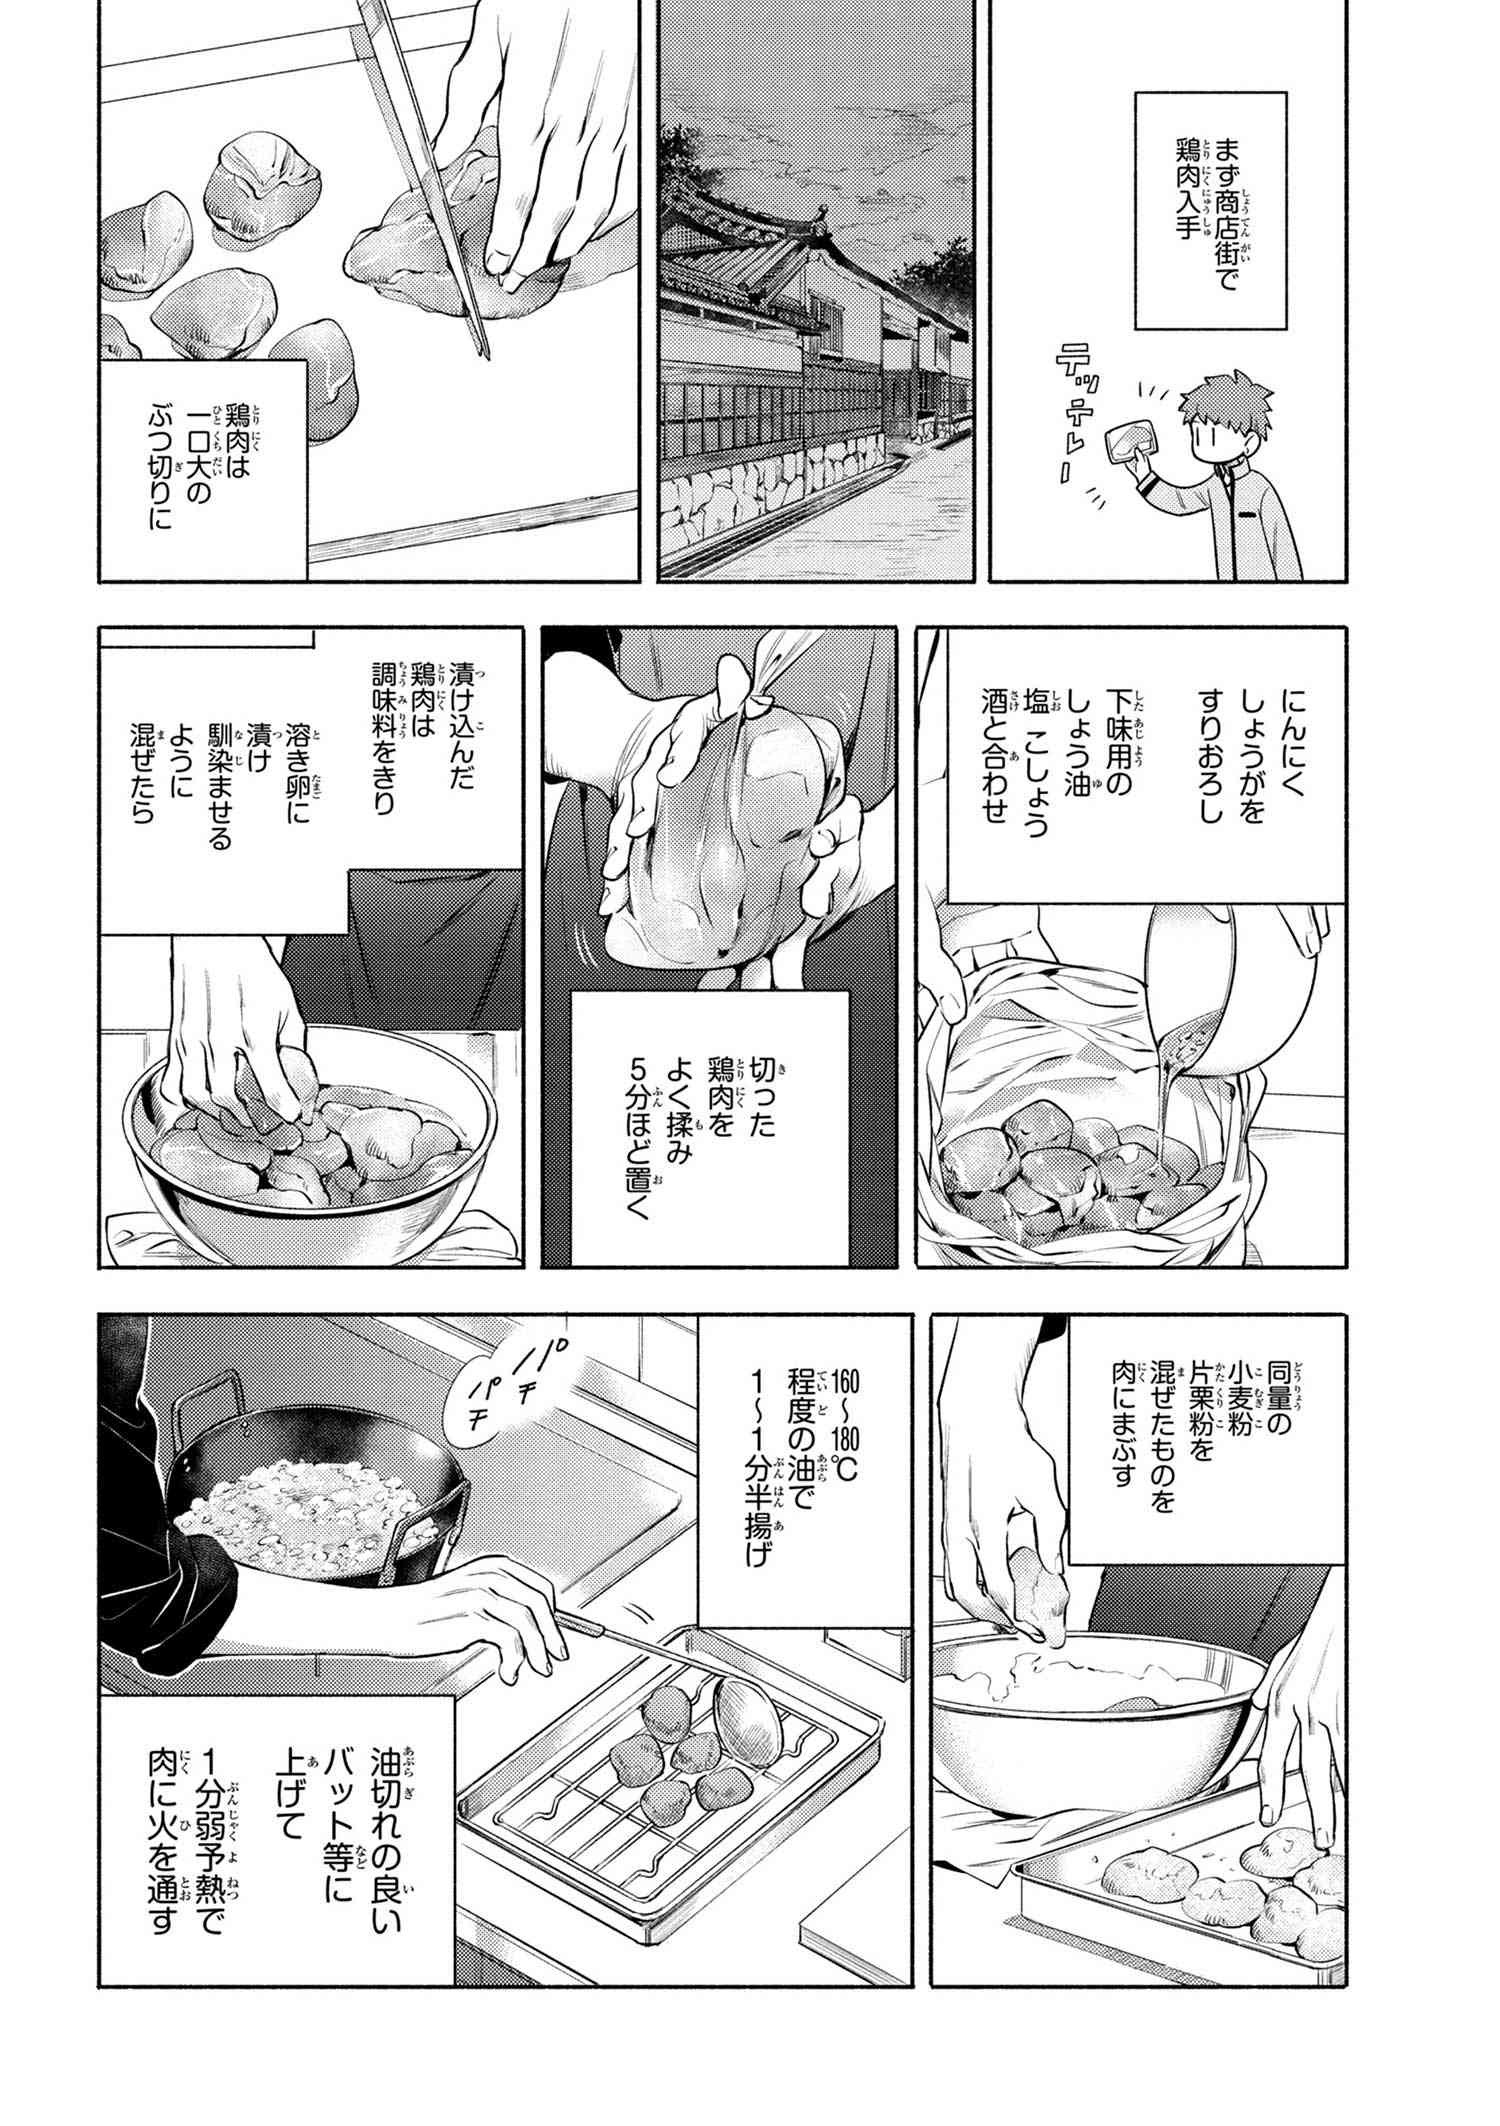 Emiya-san Chi no Kyou no Gohan - Chapter 10 - Page 6